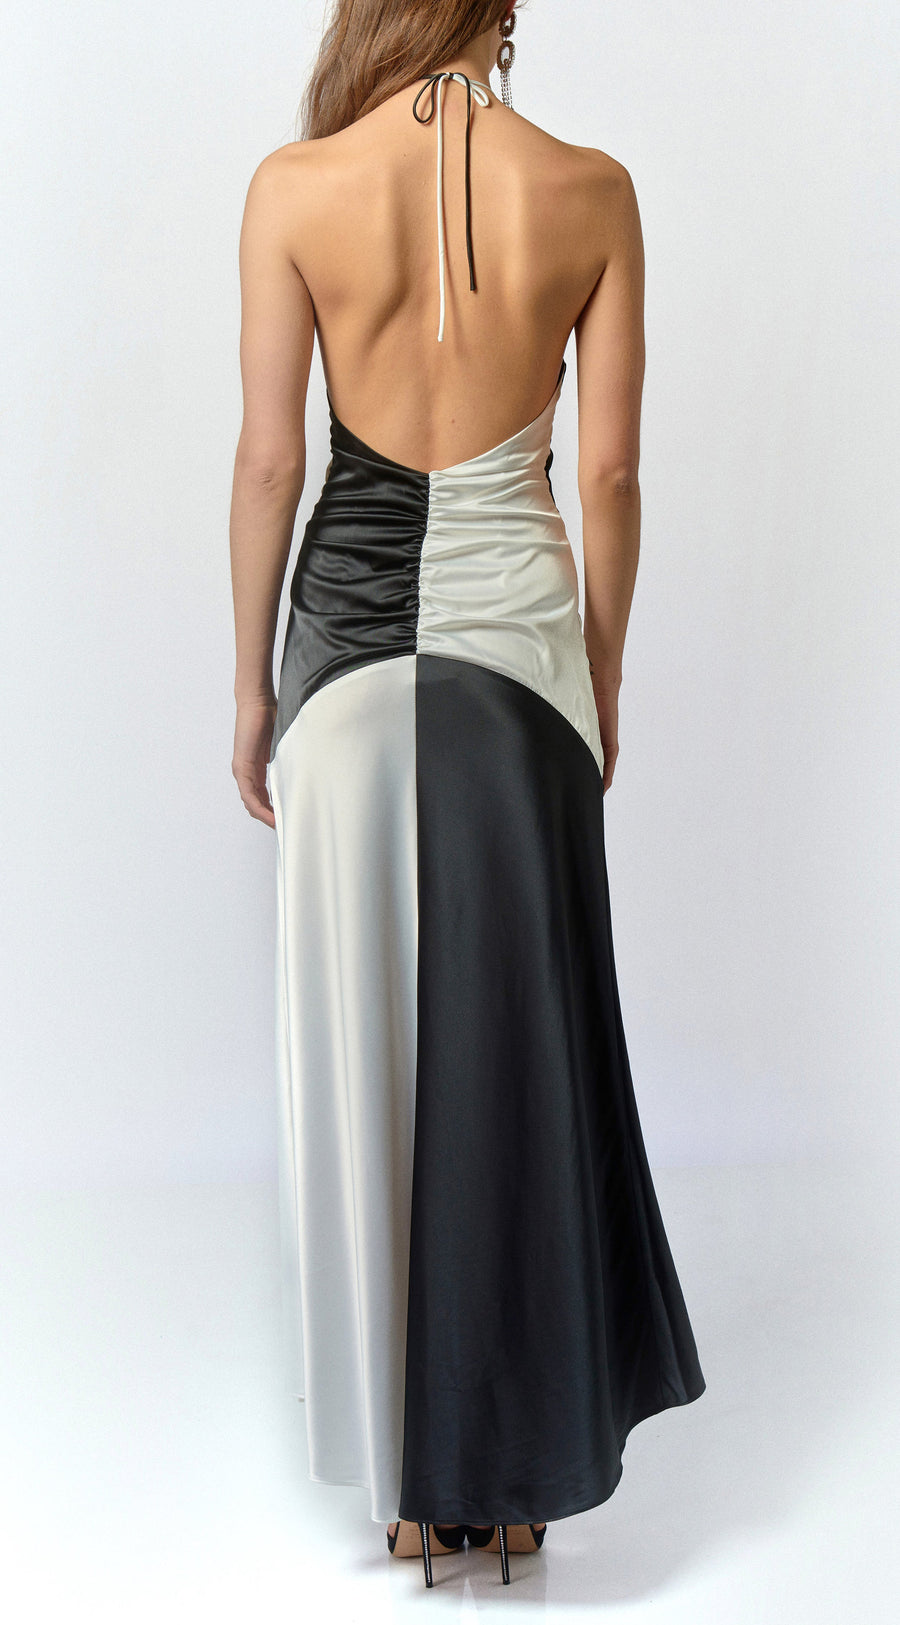 Freya Maxi Dress in Black & White Satin - De La Vali